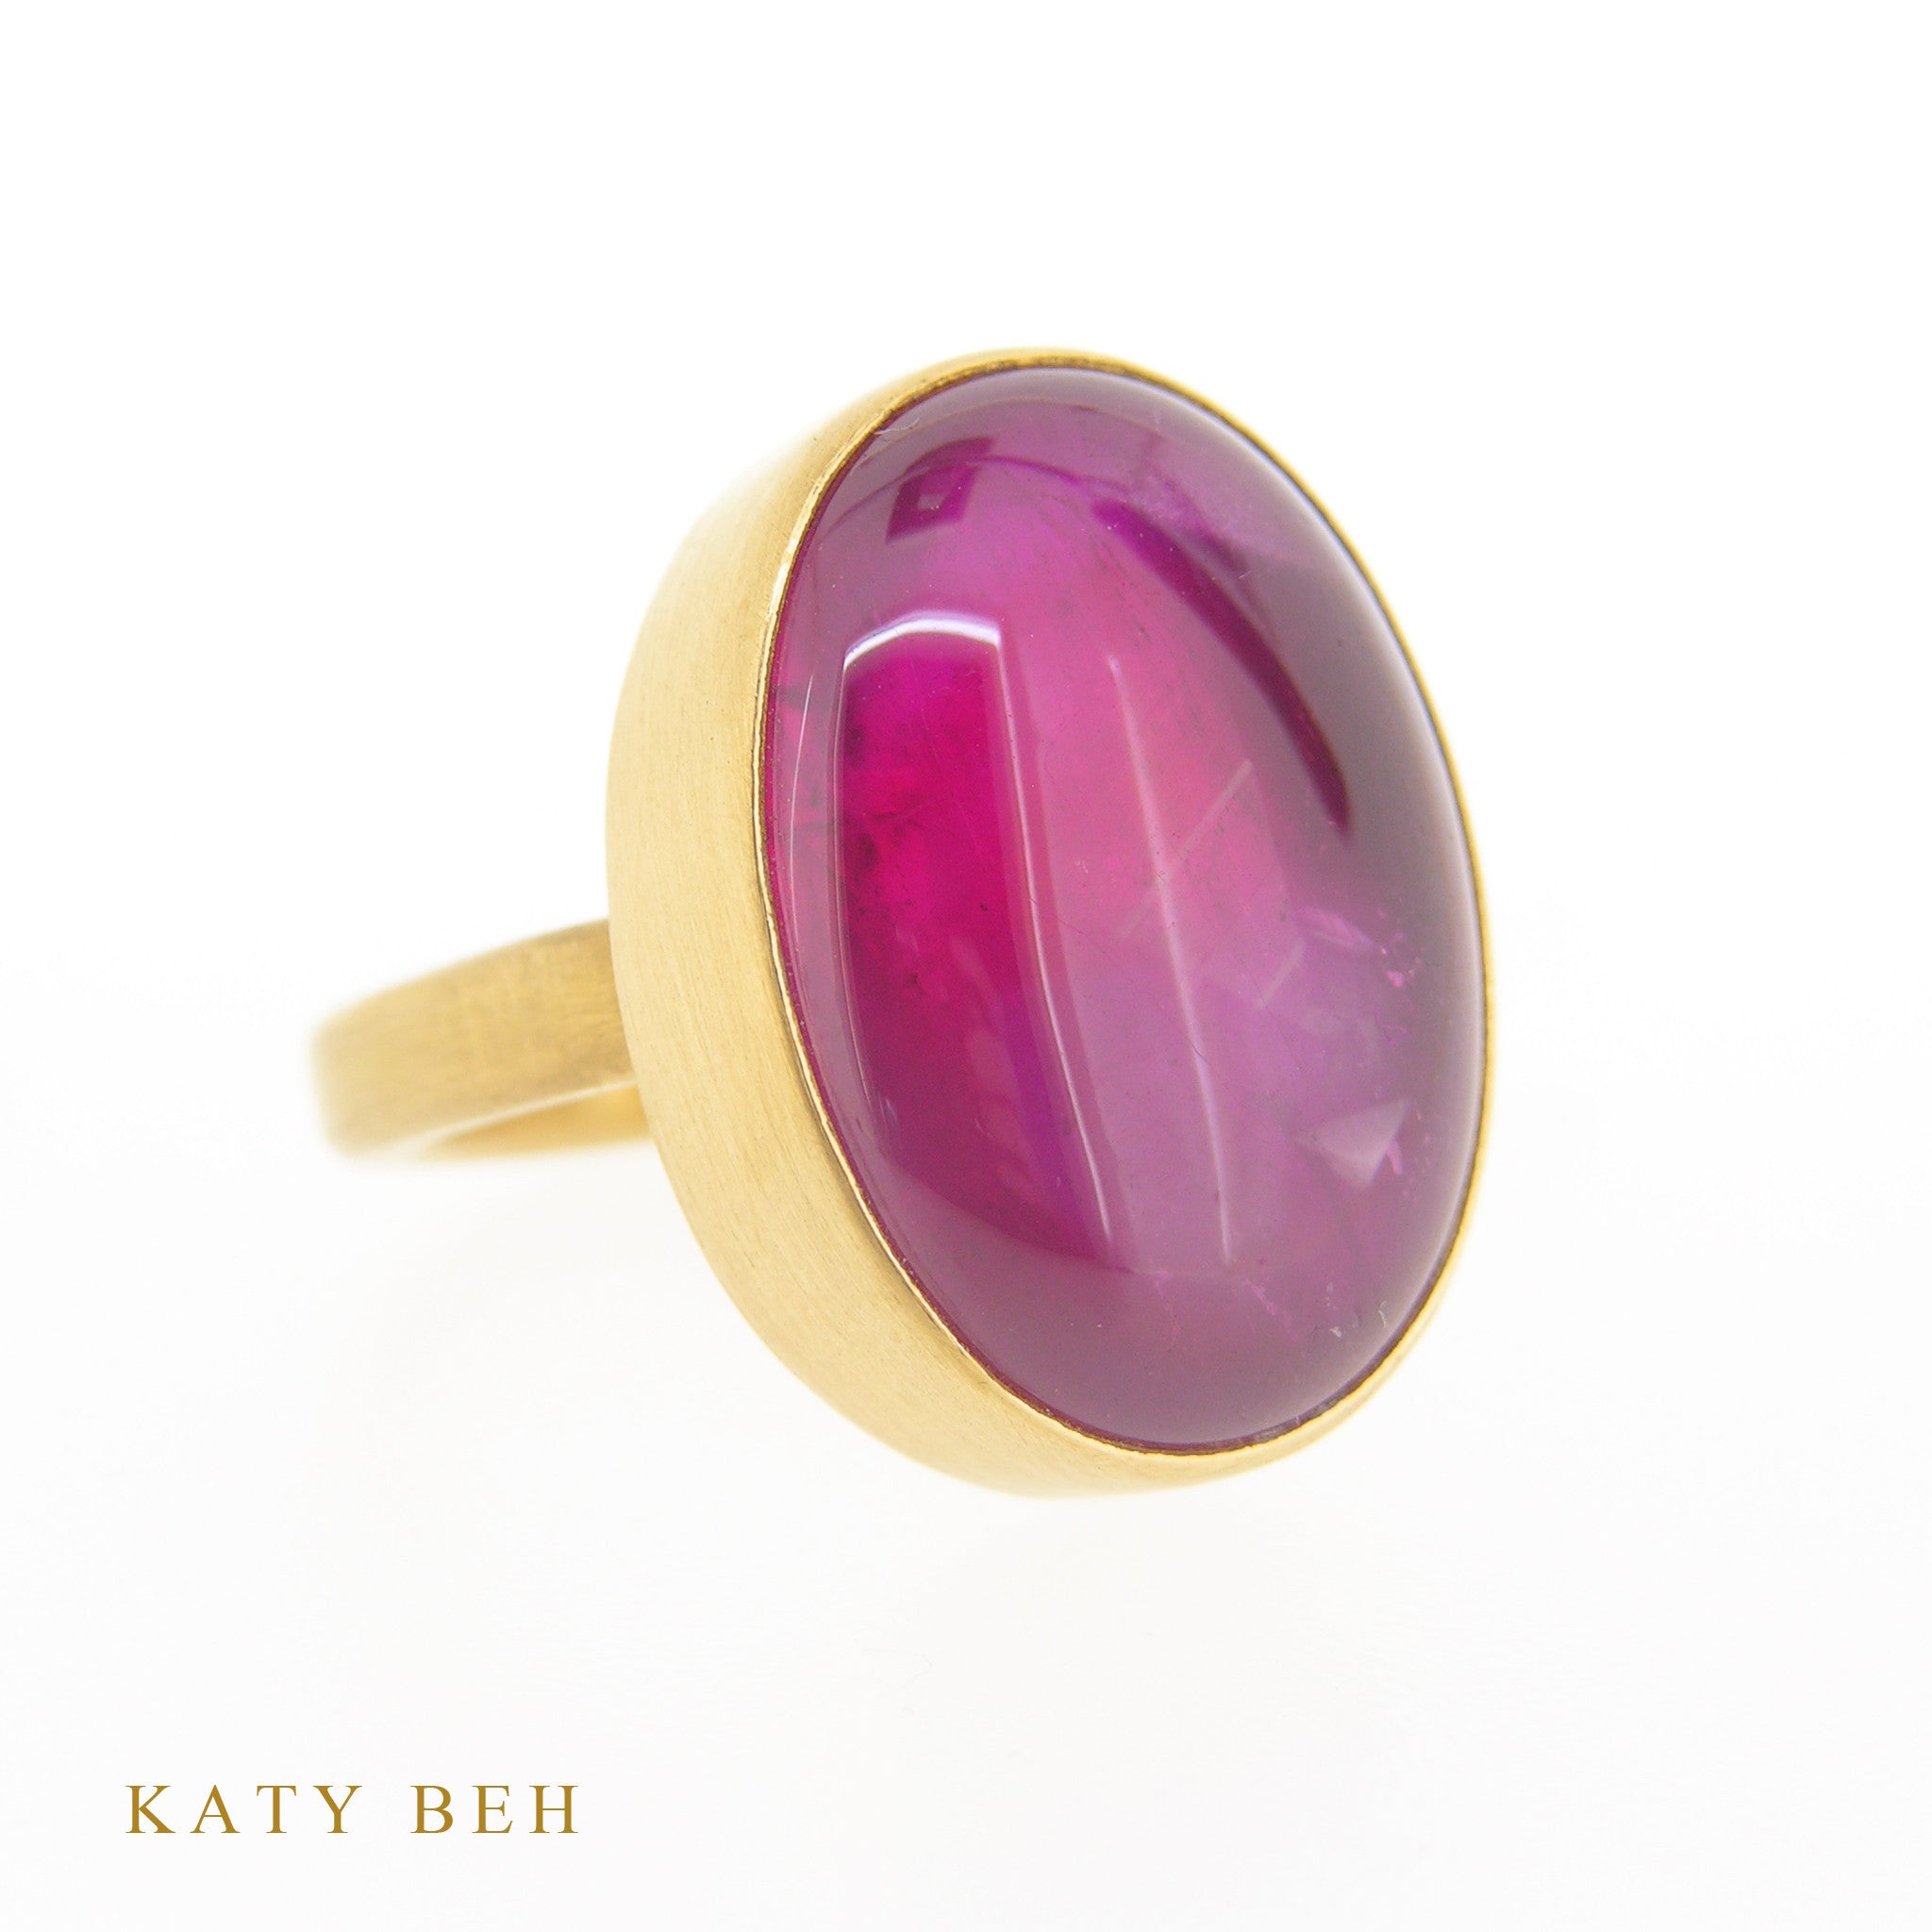 Rings - Katy Beh 22k Gold Handmade Jewelry New Orleans